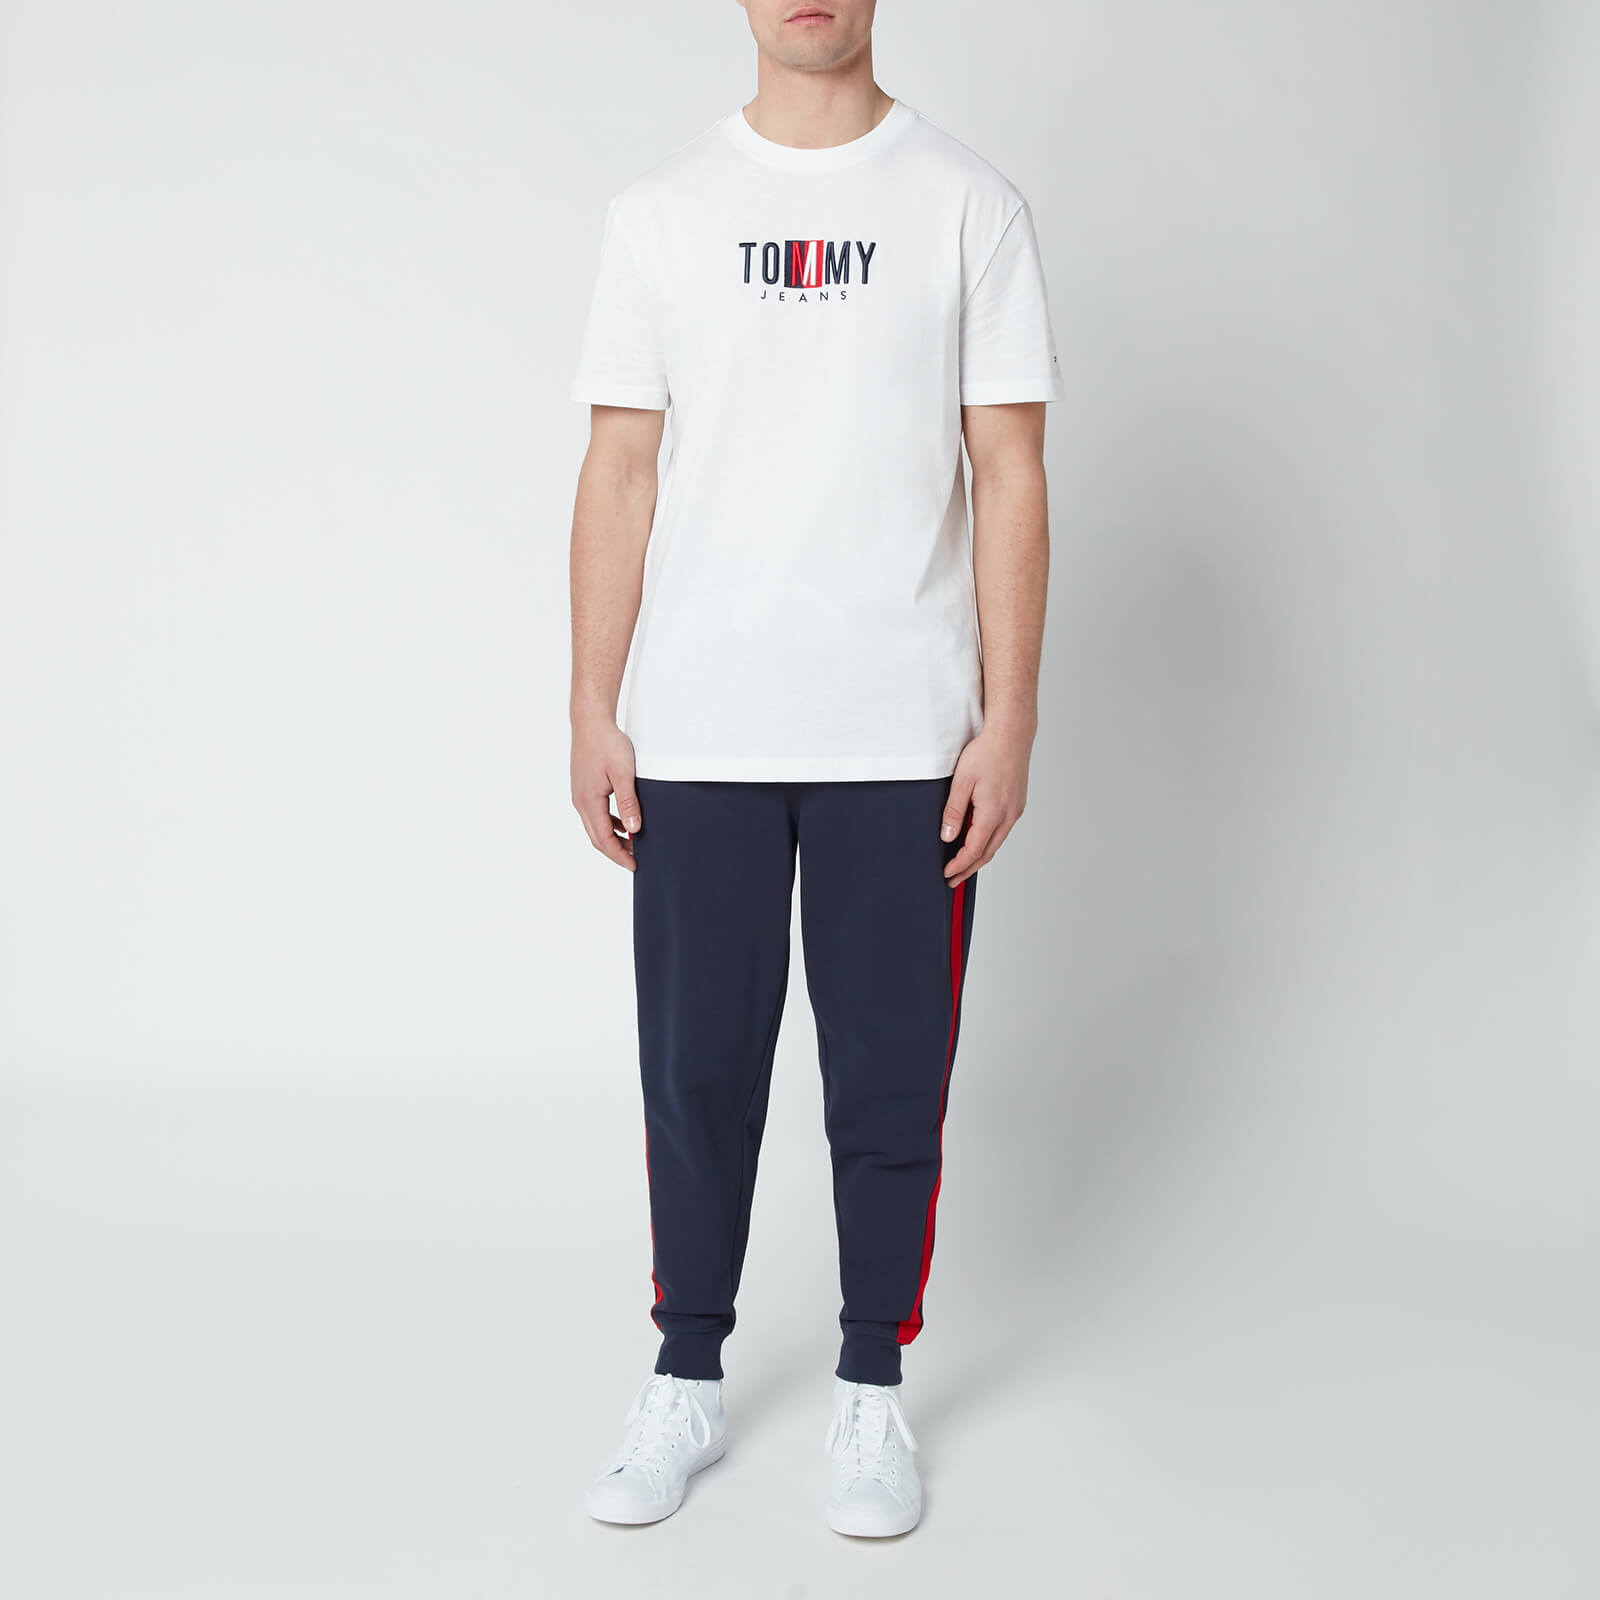 Tommy Jeans Men's Timeless Box Logo T-Shirt - White - S